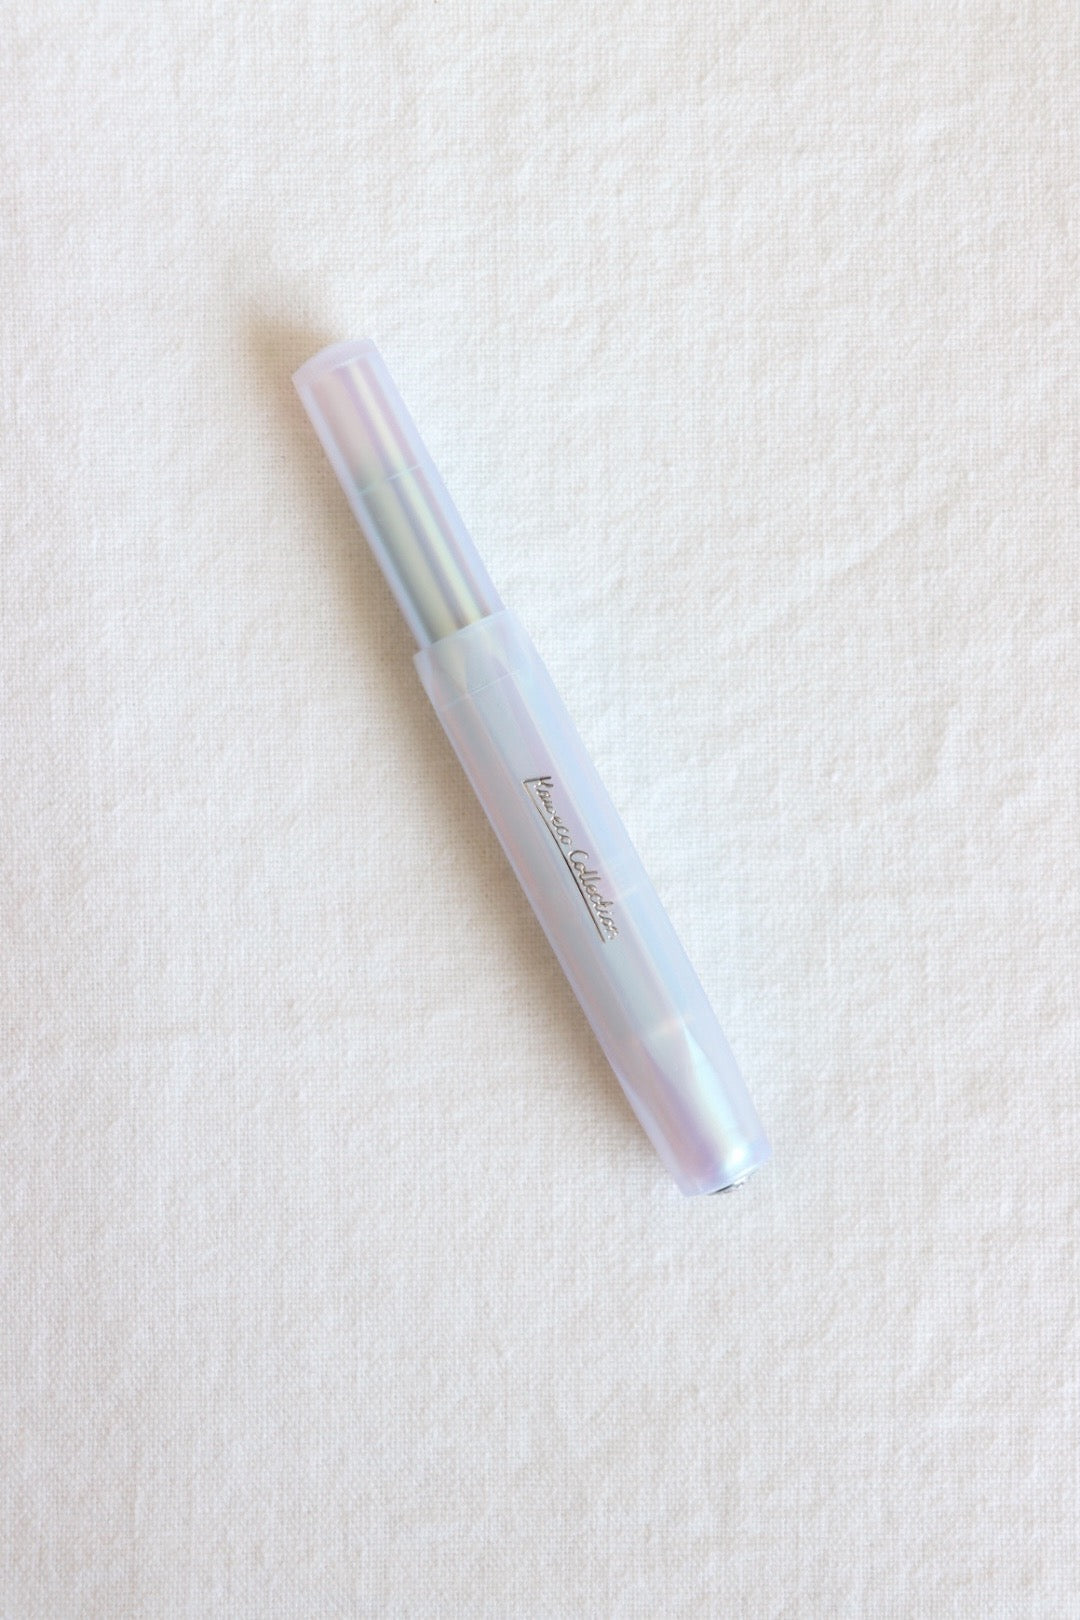 Kaweco Sport Fountain Pen, Iridescent Pearl